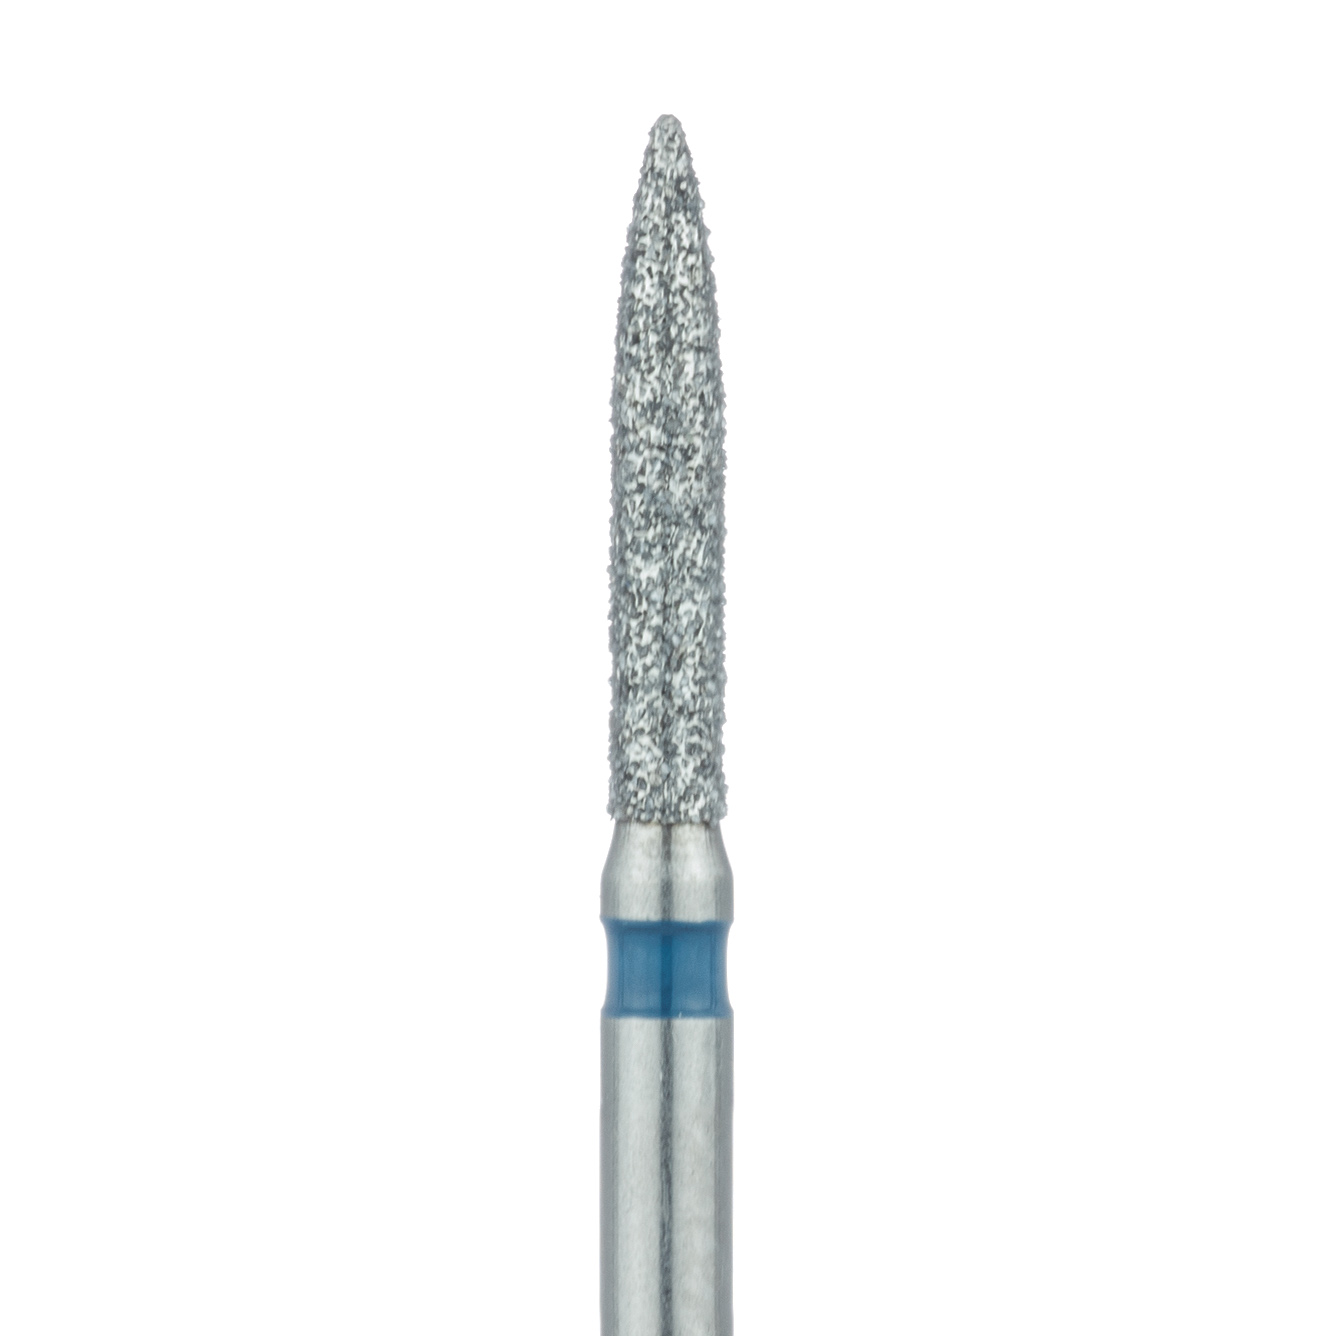 862-014-FG Flame Diamond Bur, 1.4mm Ø, Medium, FG